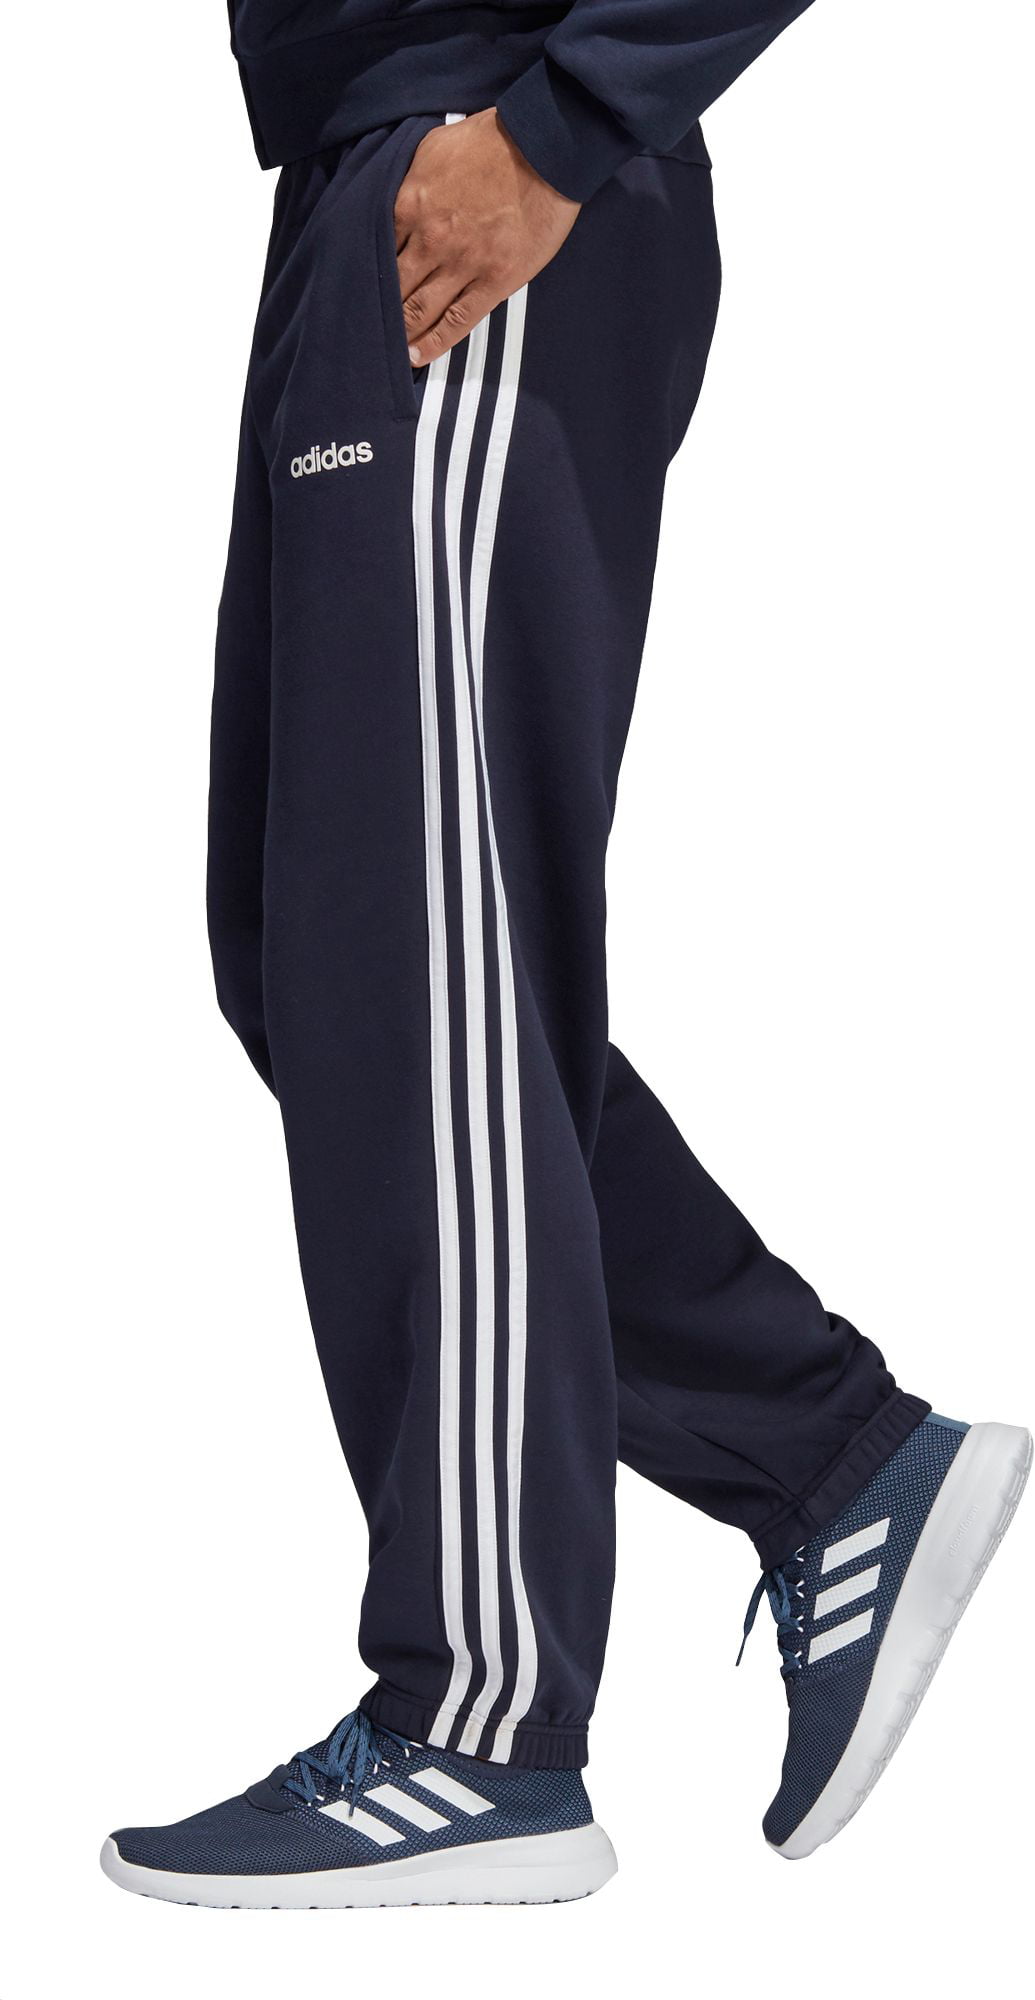 Adidas - adidas Men's Essentials 3-Stripes Fleece Pants - Walmart.com ...